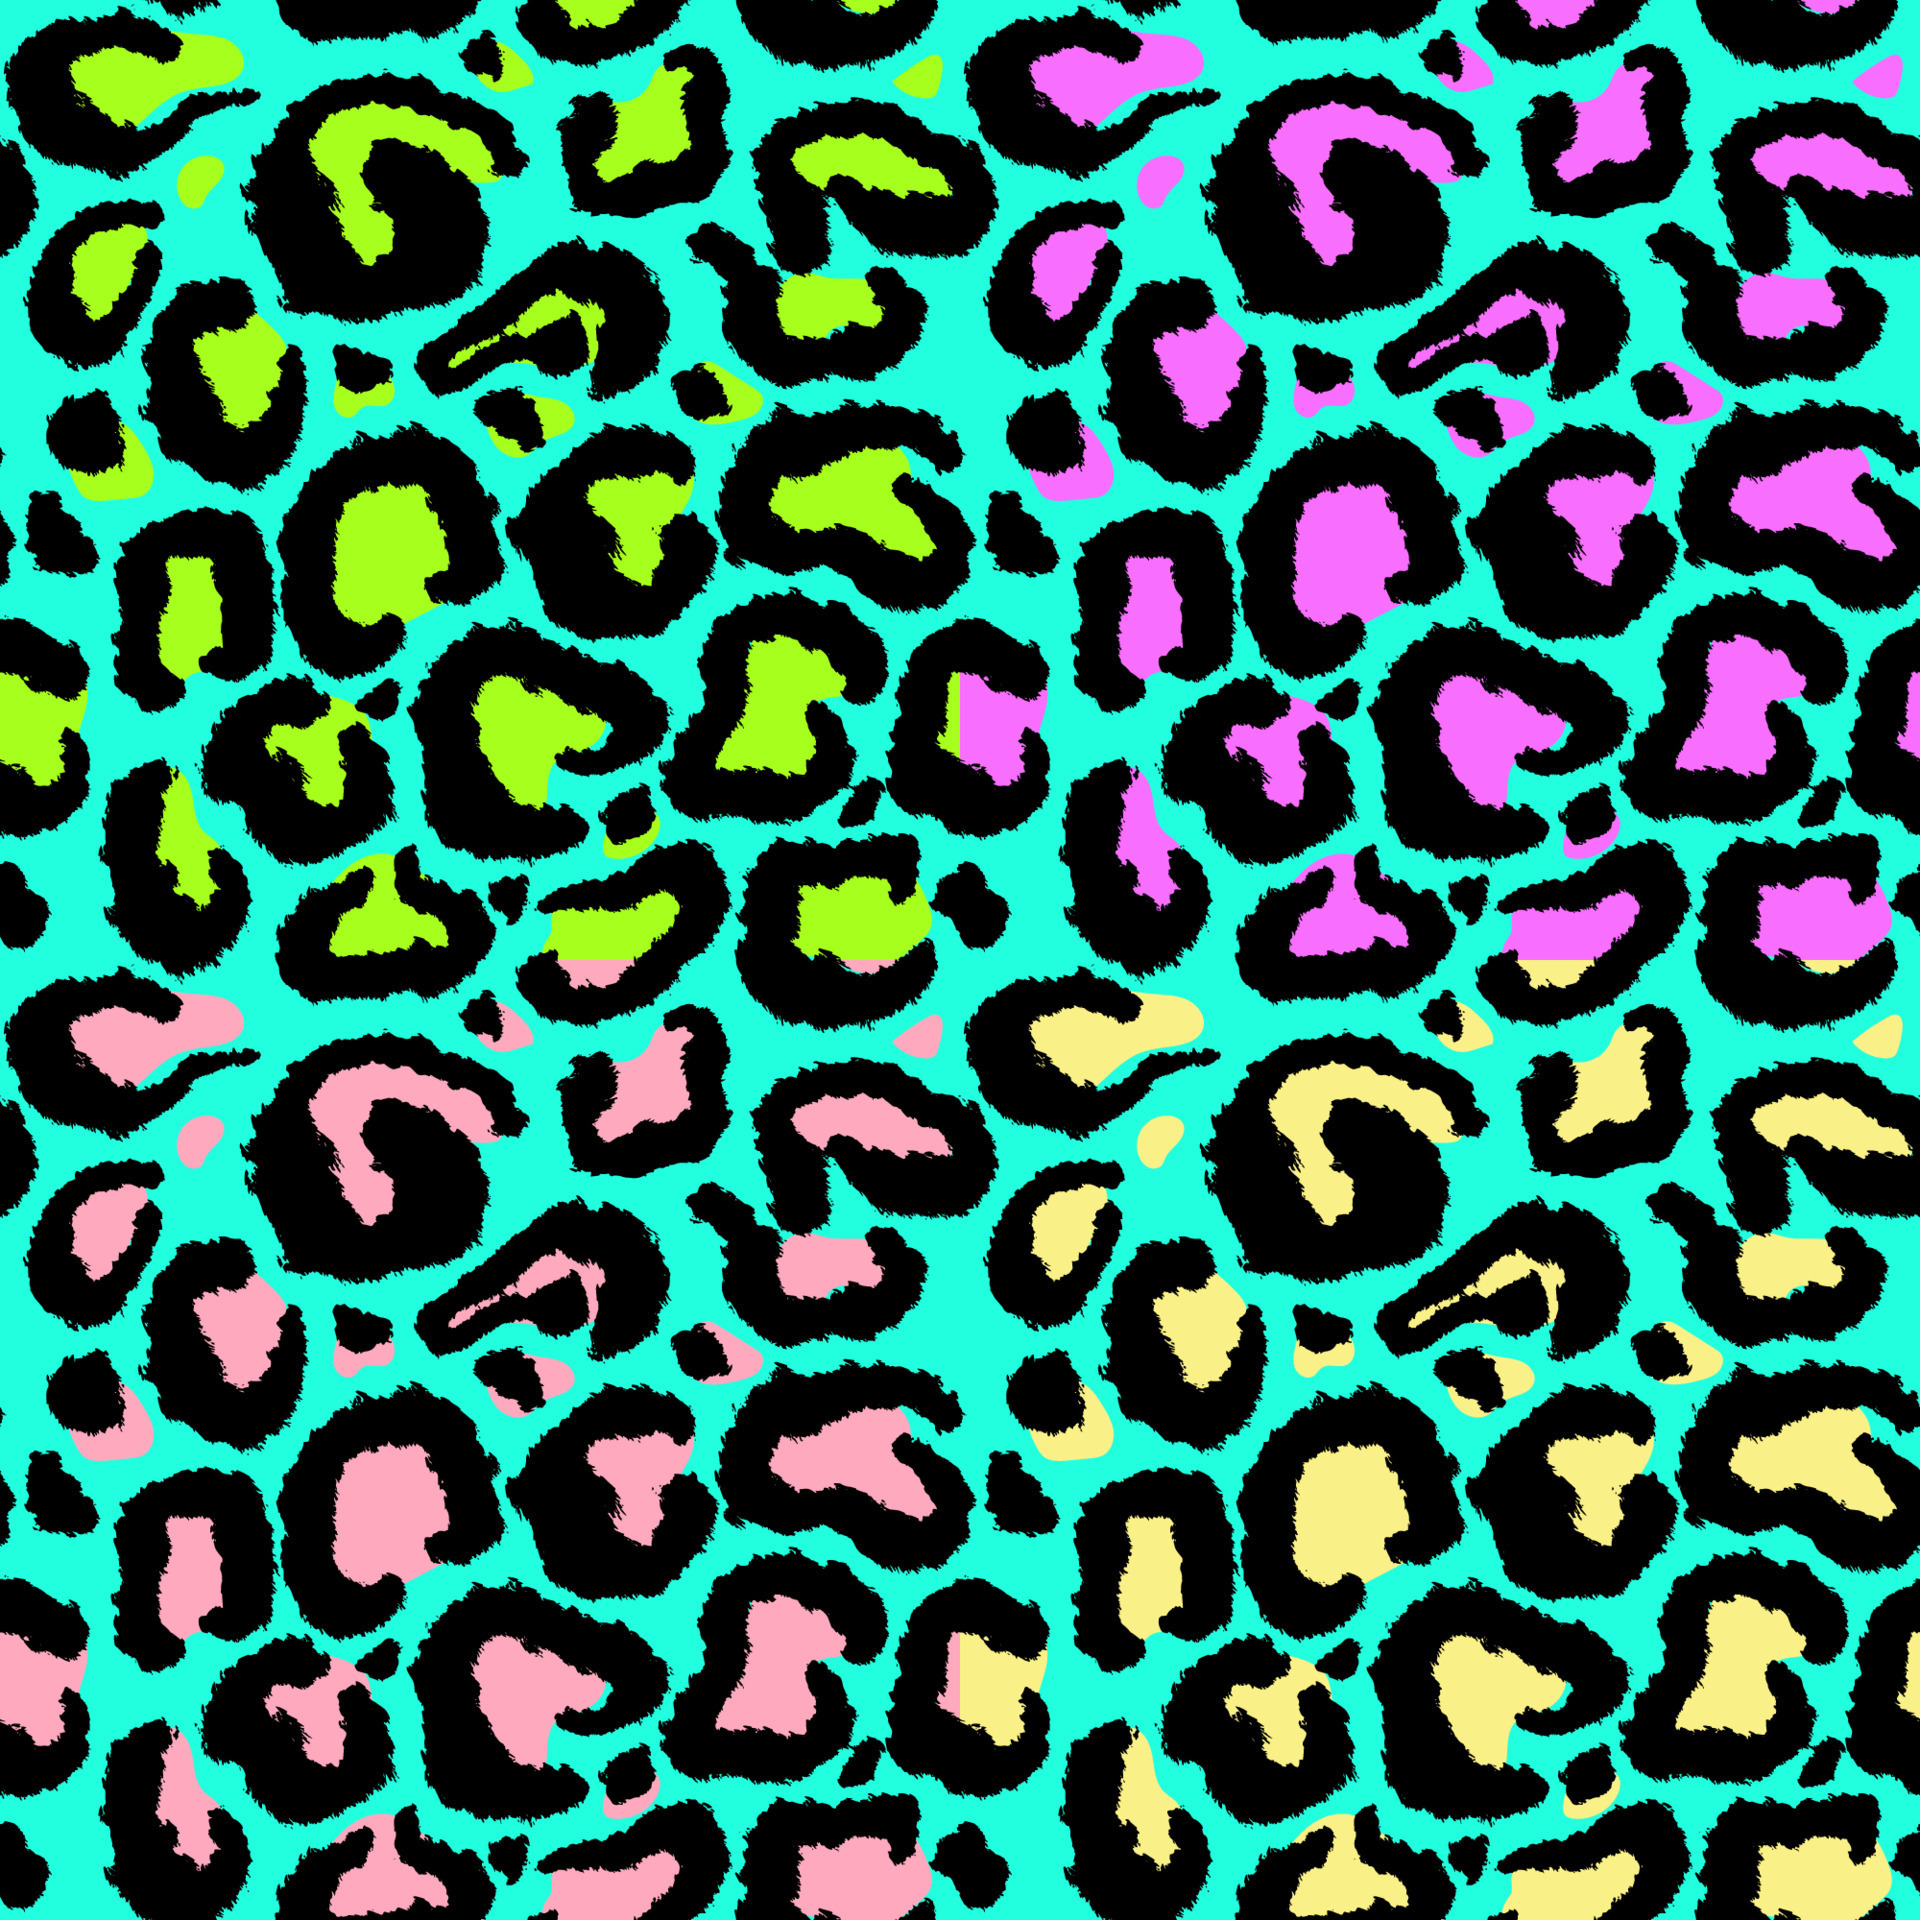 Leopard Skin Artwork Imitation Colorful Print. 12318492 Vector Art at ...